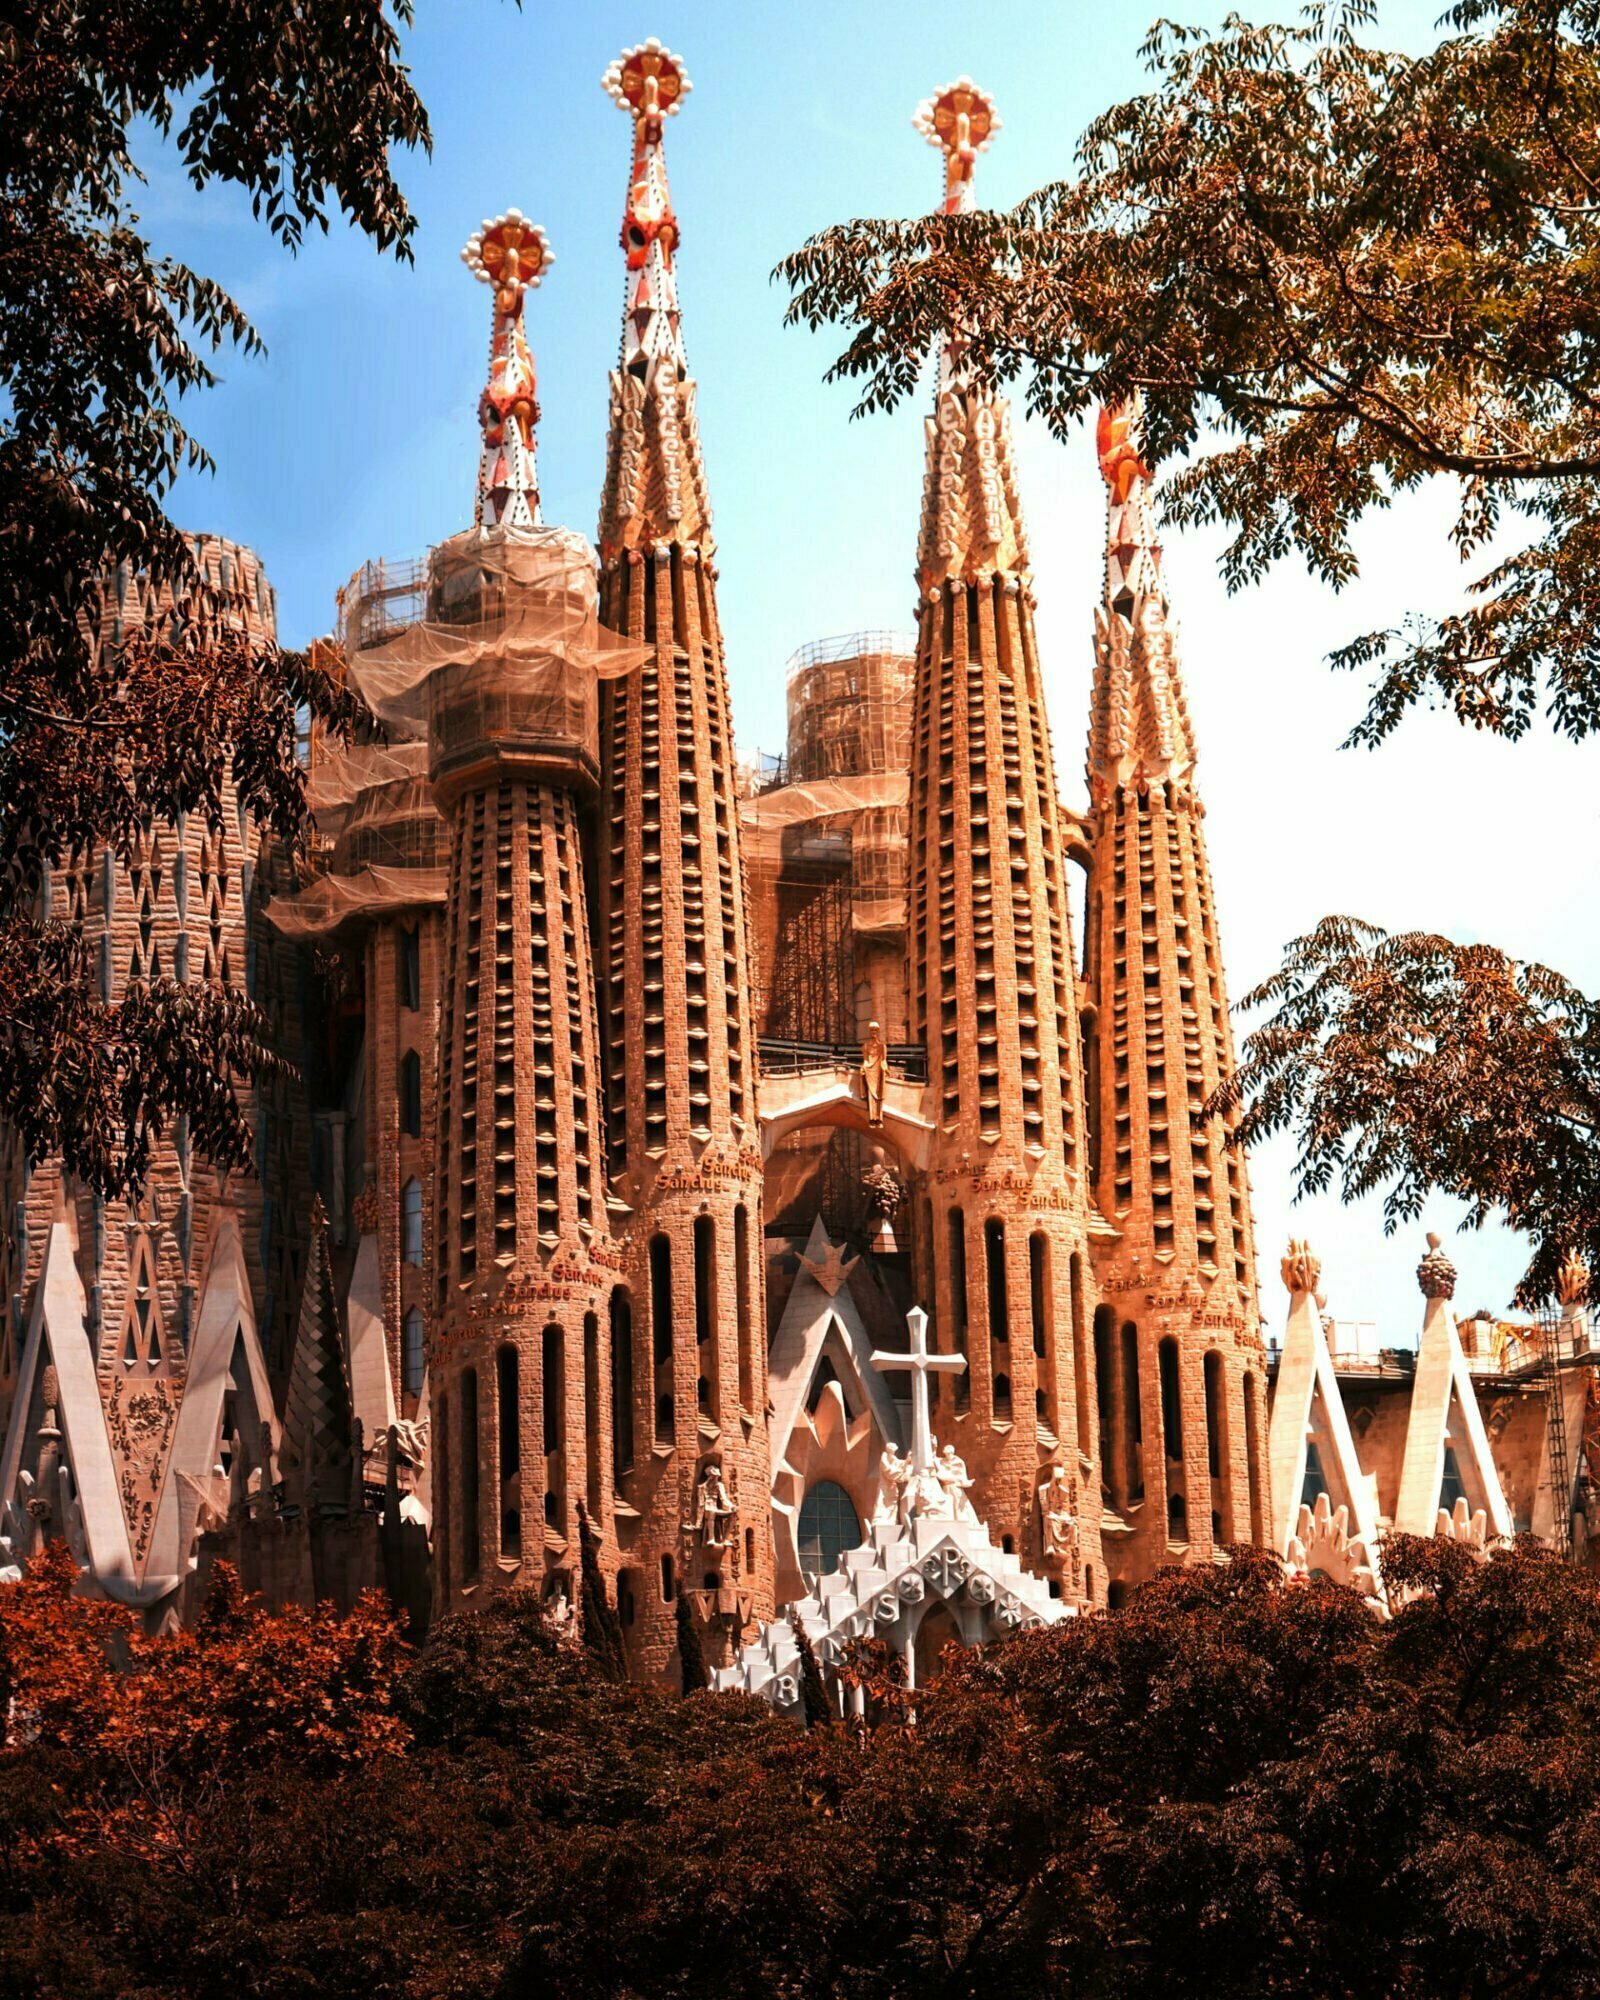 A scene depicting La Sagrada Família is one of Gaudí's most famous works in Barcelona